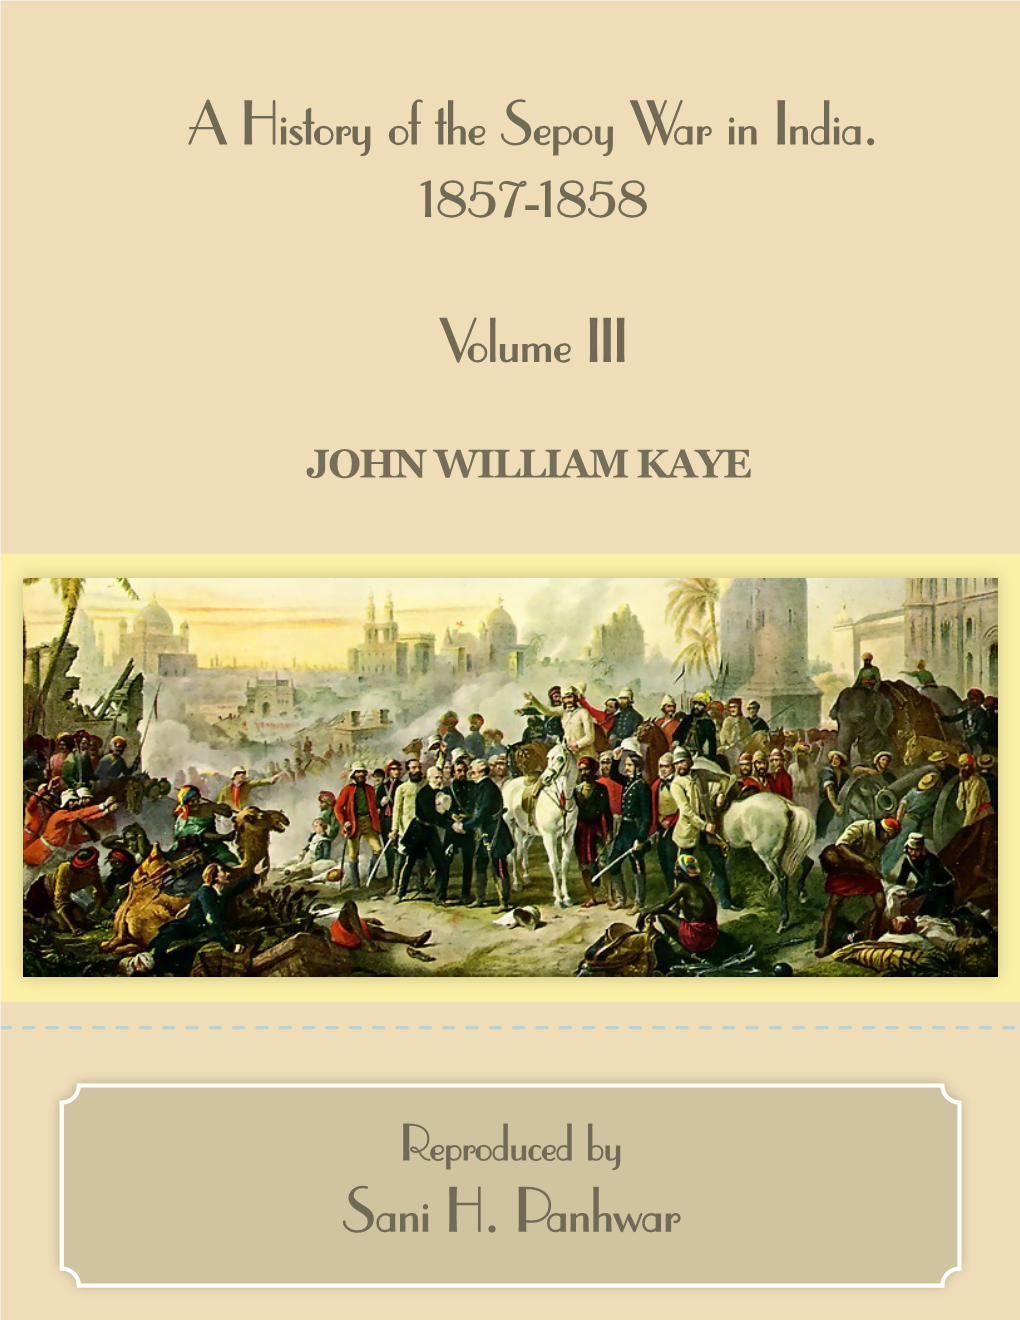 Volume III, by John William Kaye